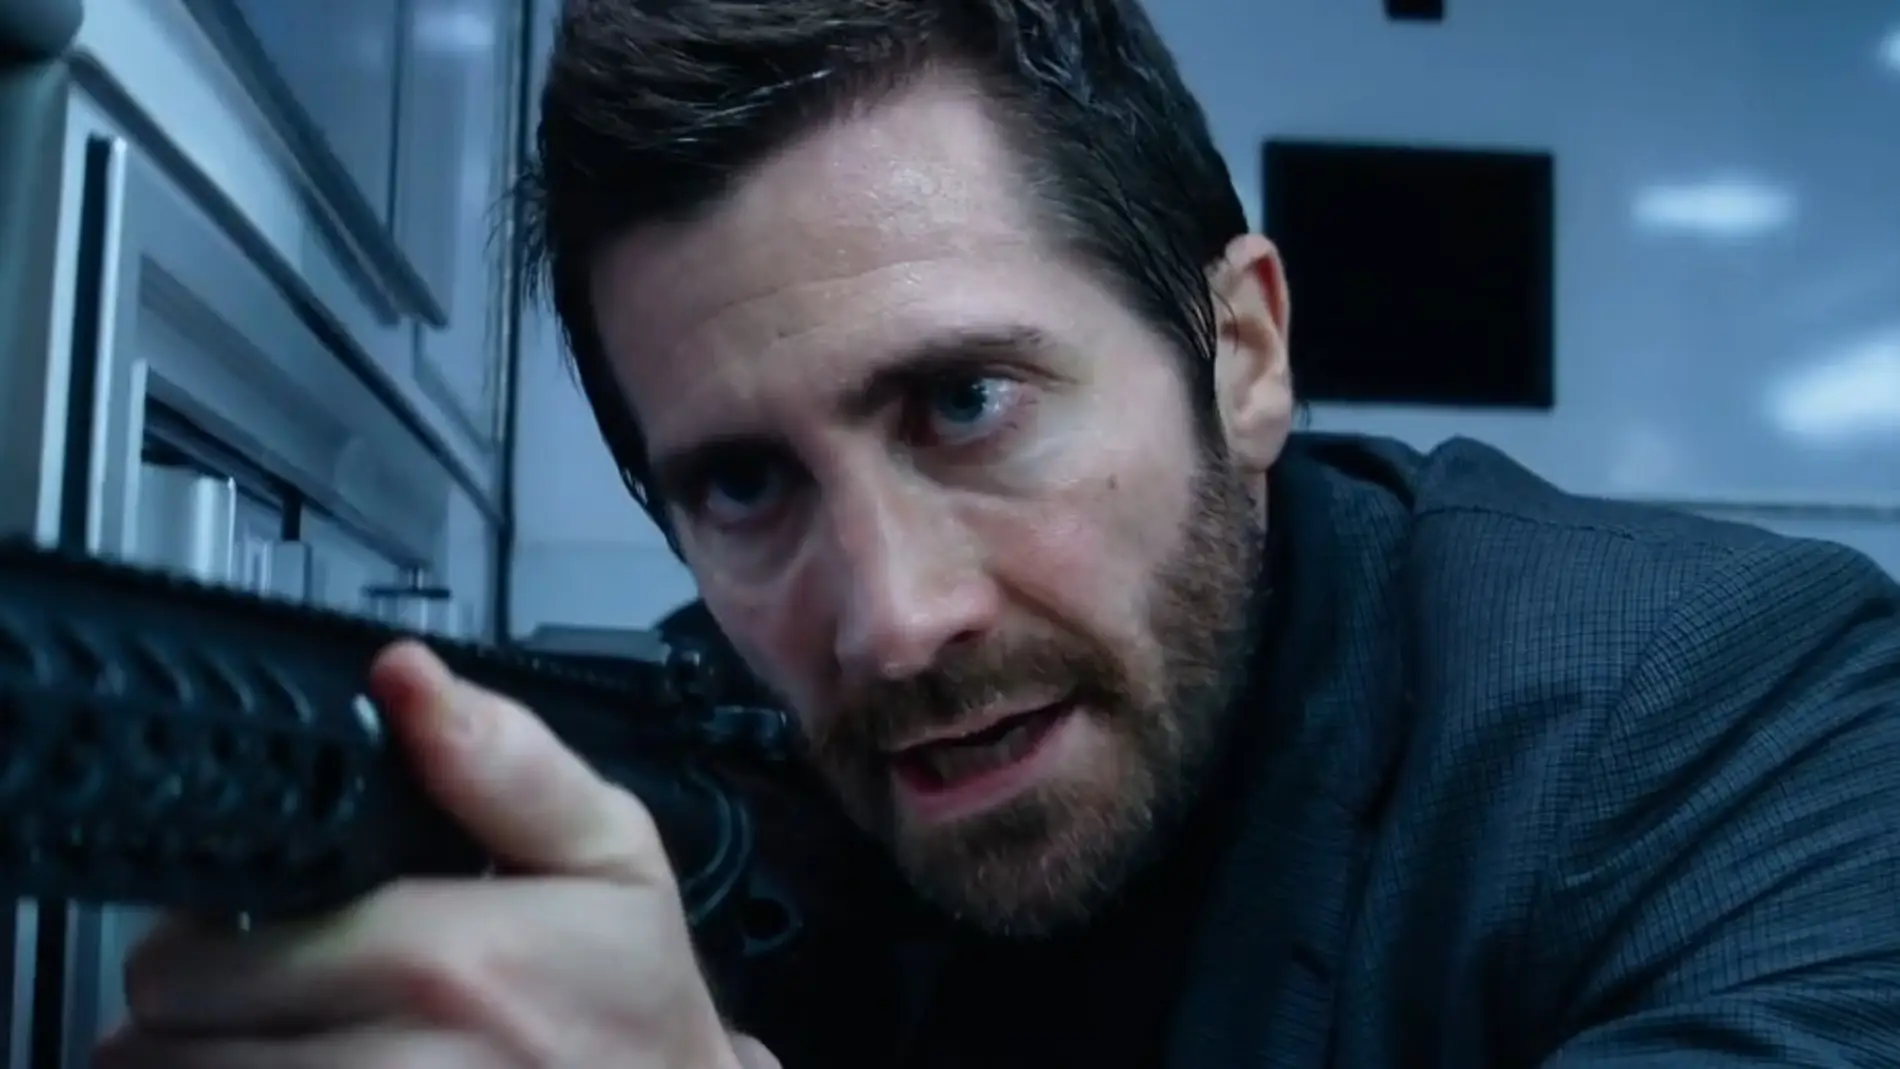 Jake Gyllenhaal en 'Ambulance - Plan de huida'